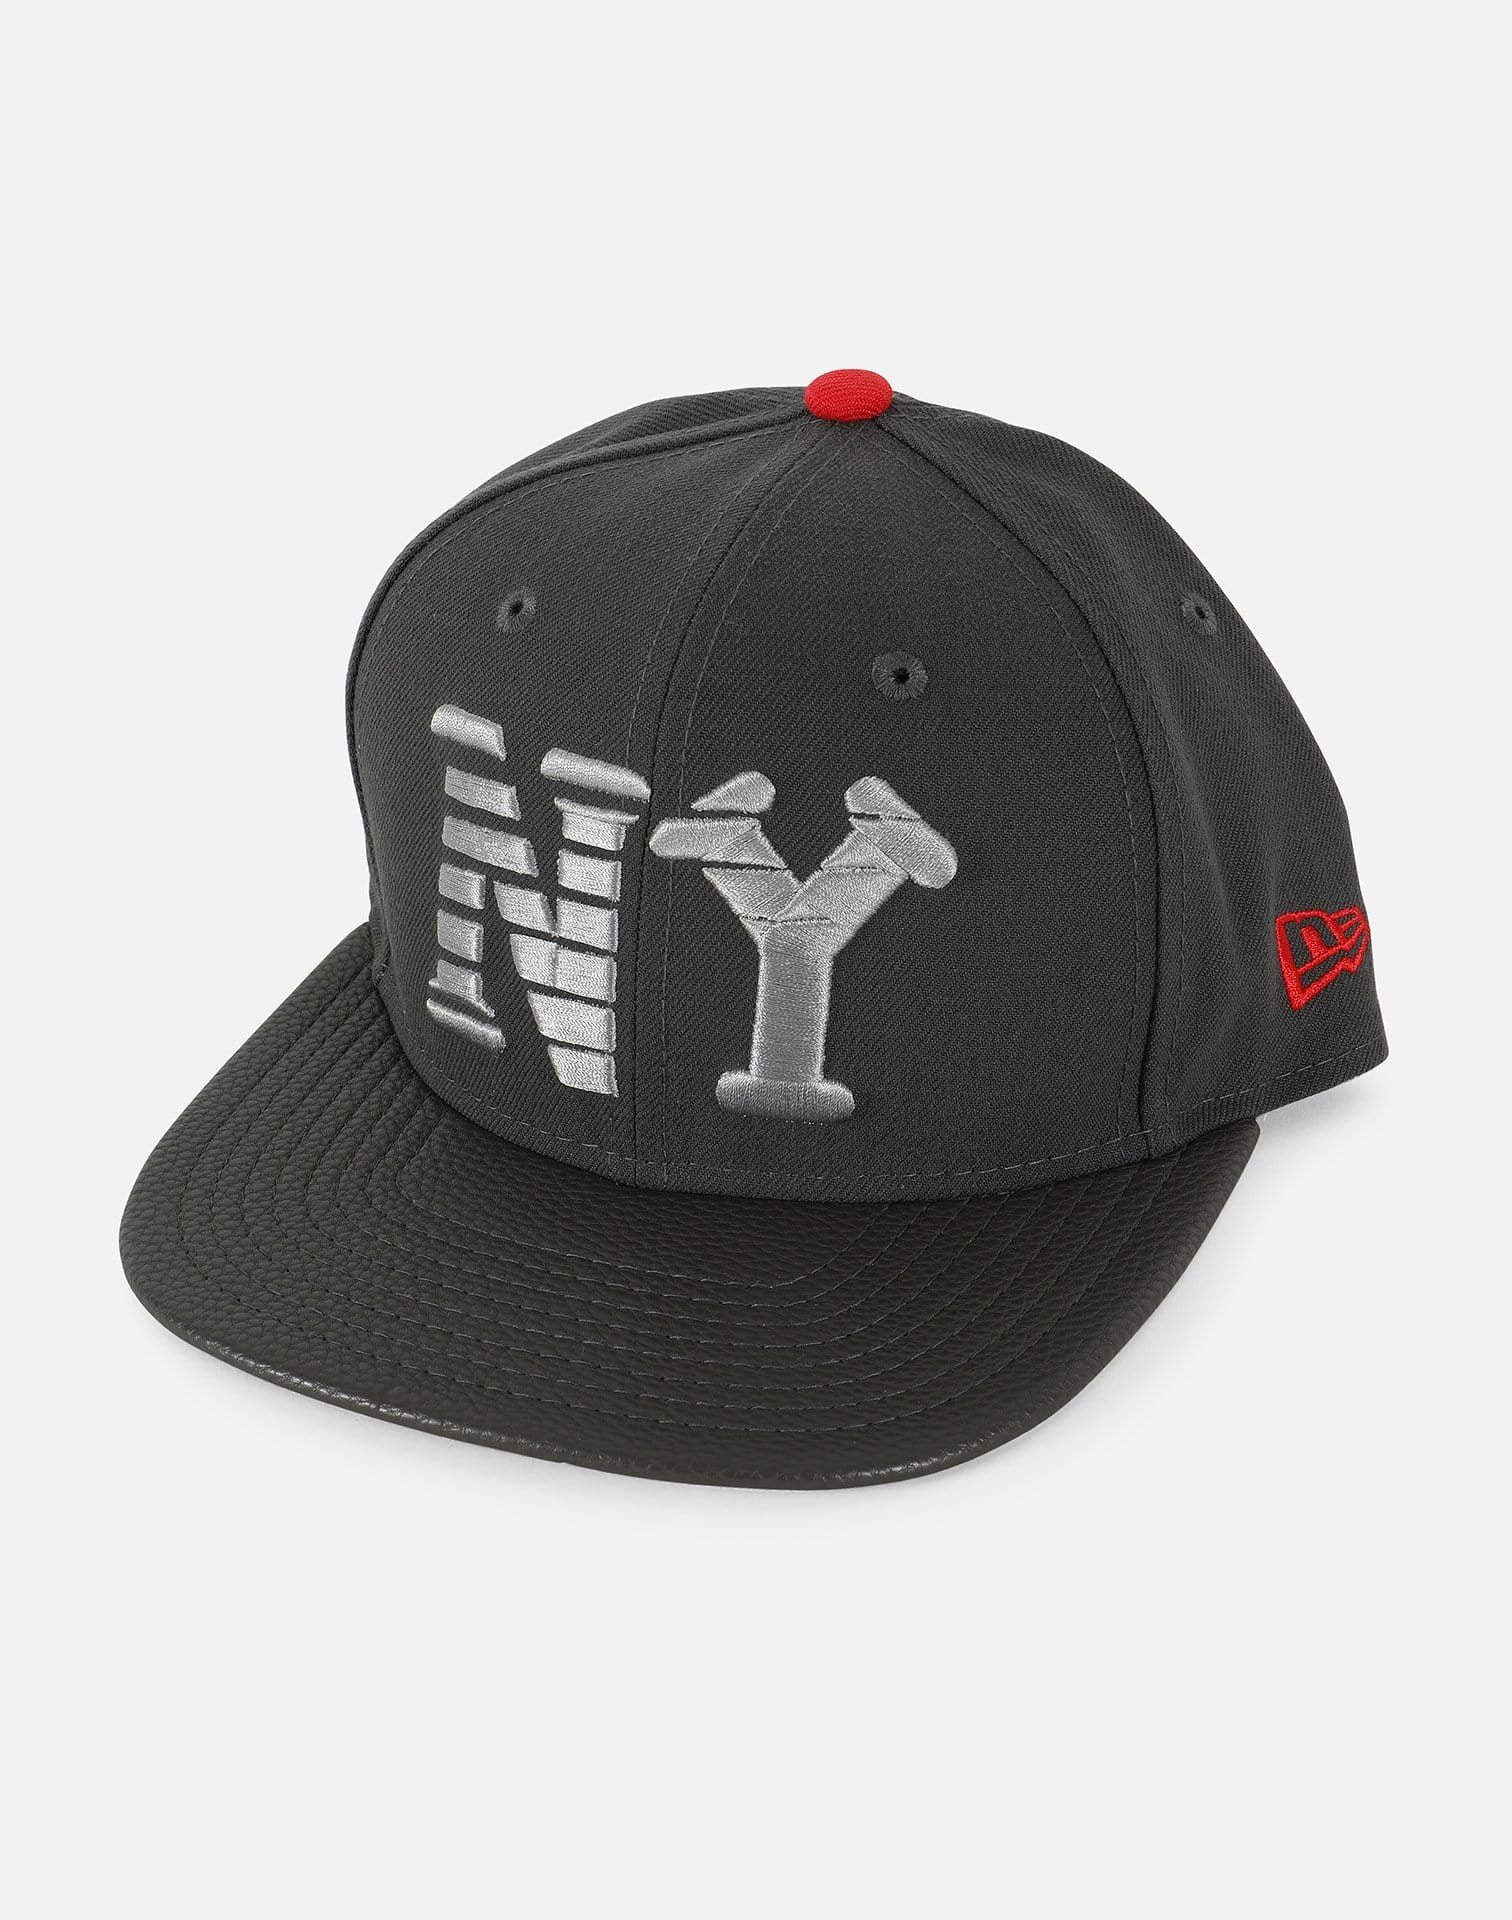 New Era Exclusive MLB New York Yankees Snapback Hat